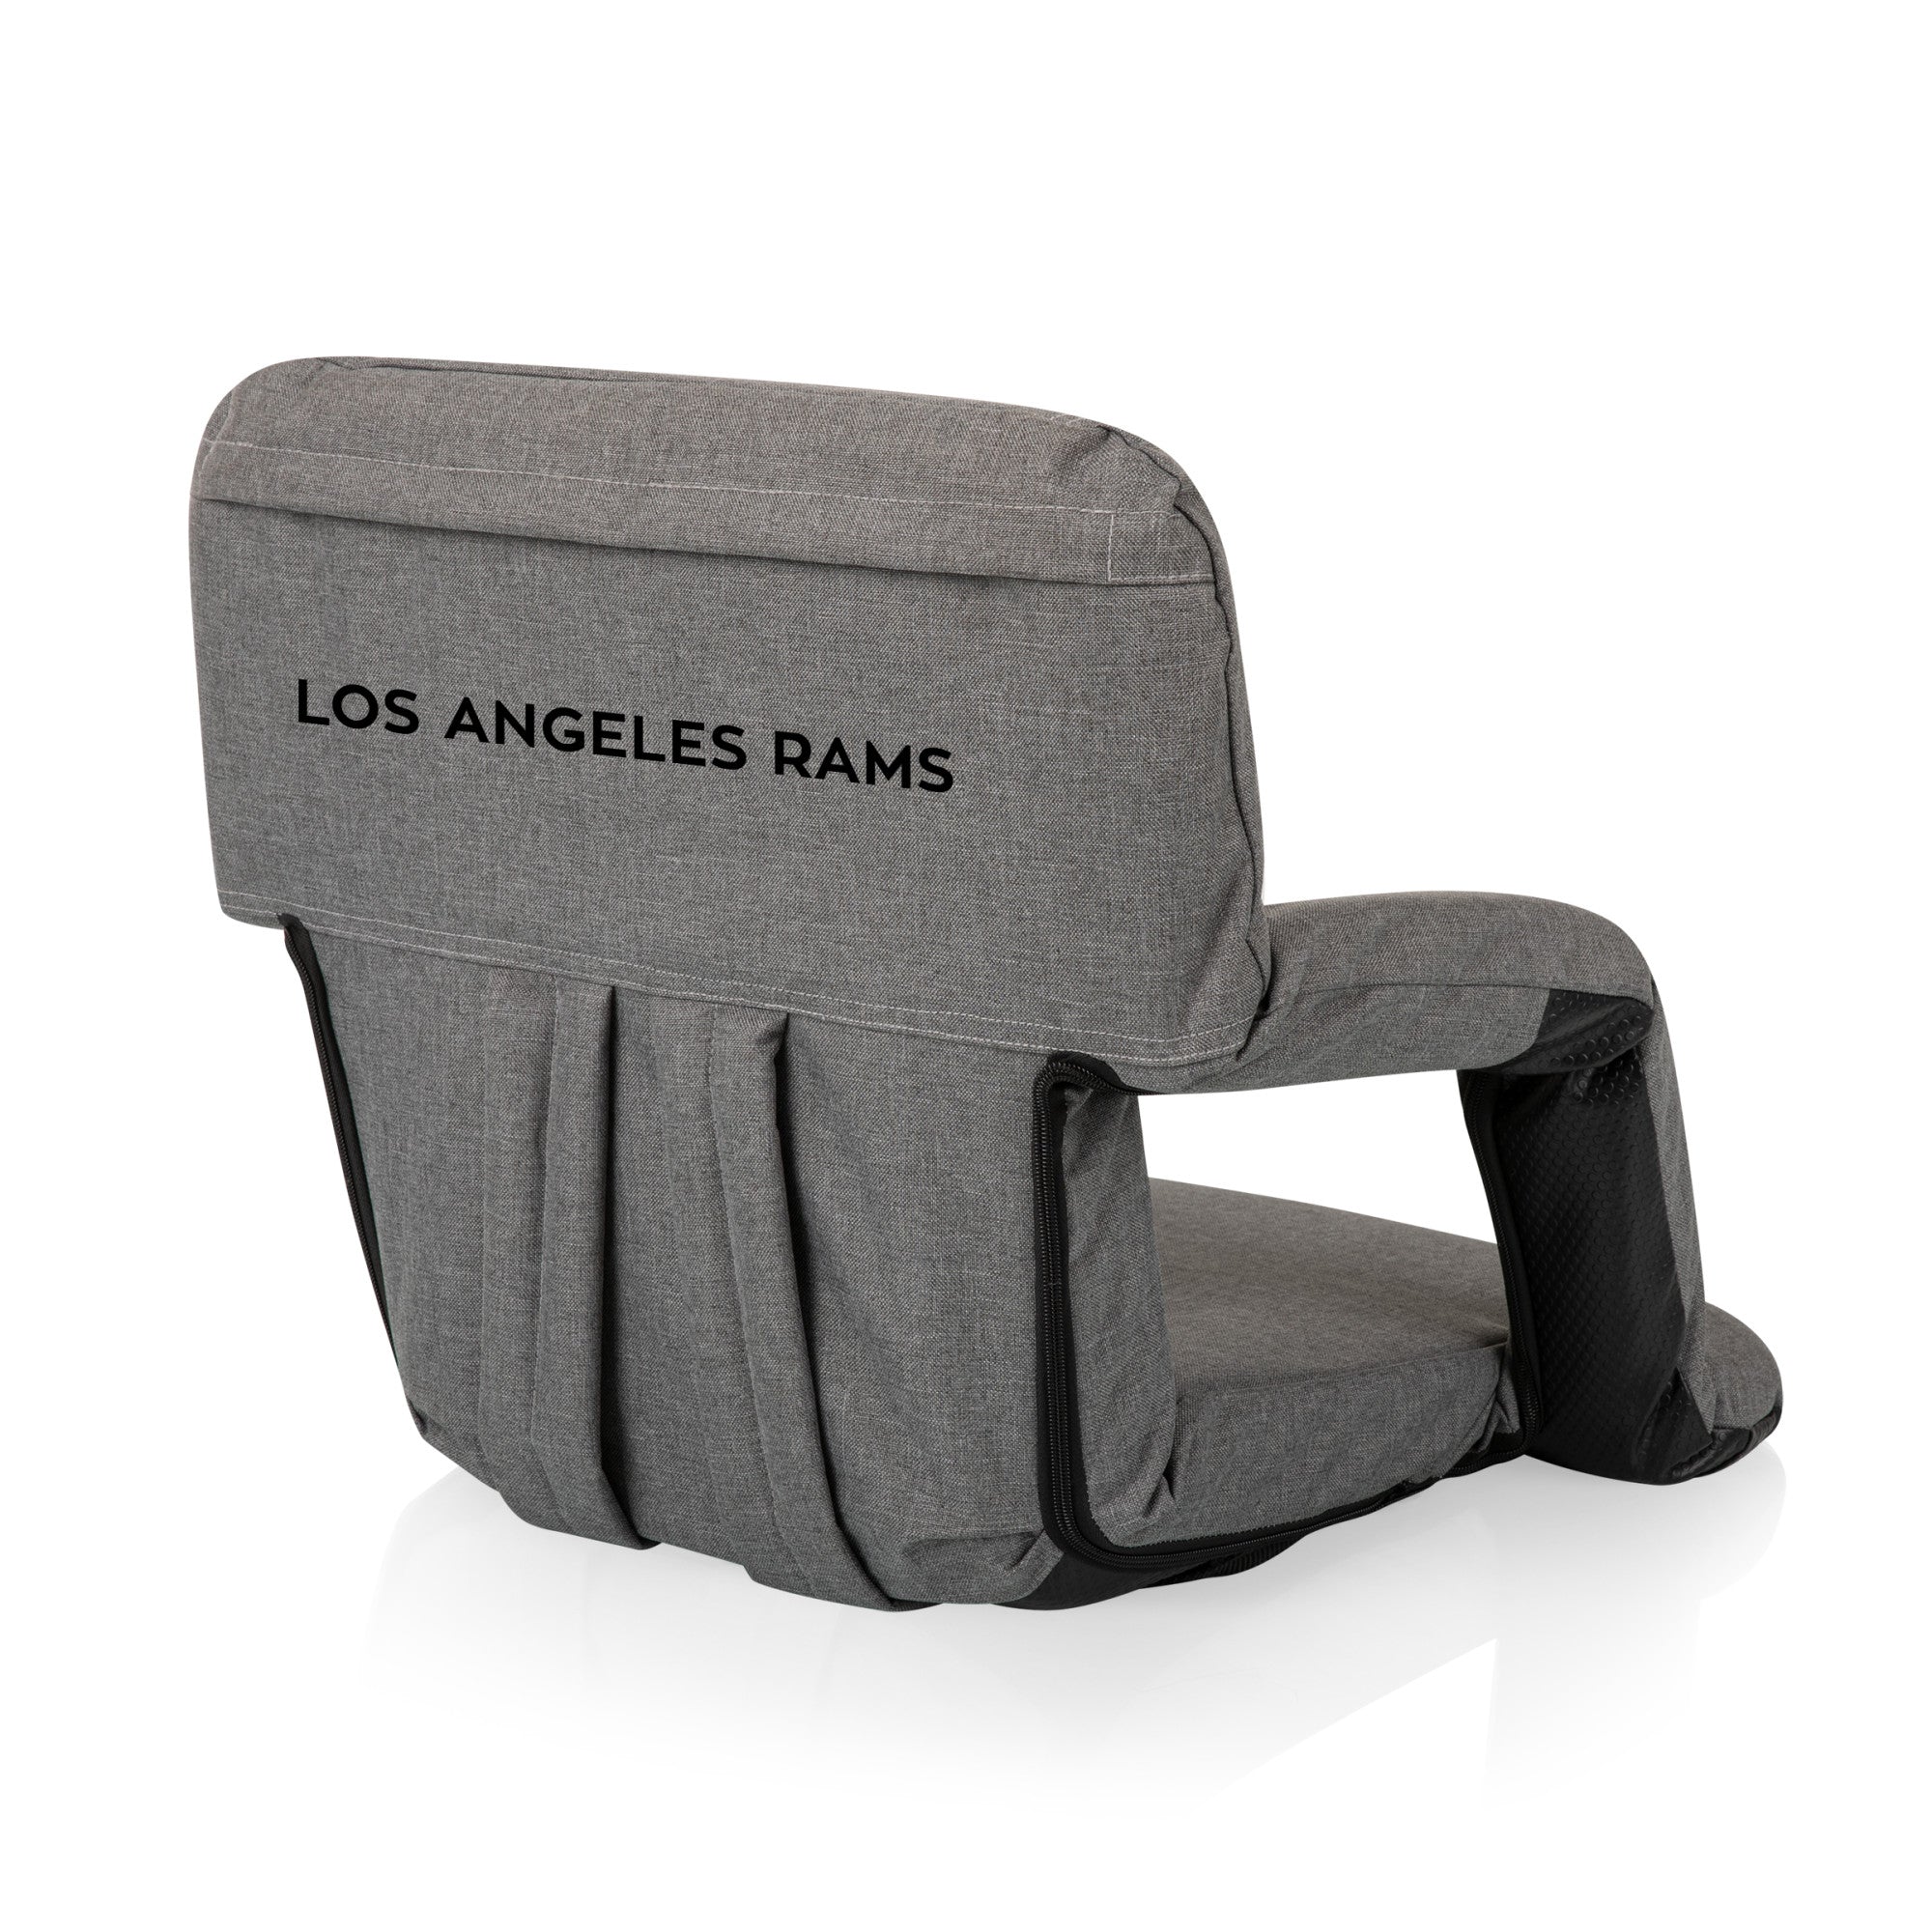 Los Angeles Rams - Ventura Portable Reclining Stadium Seat